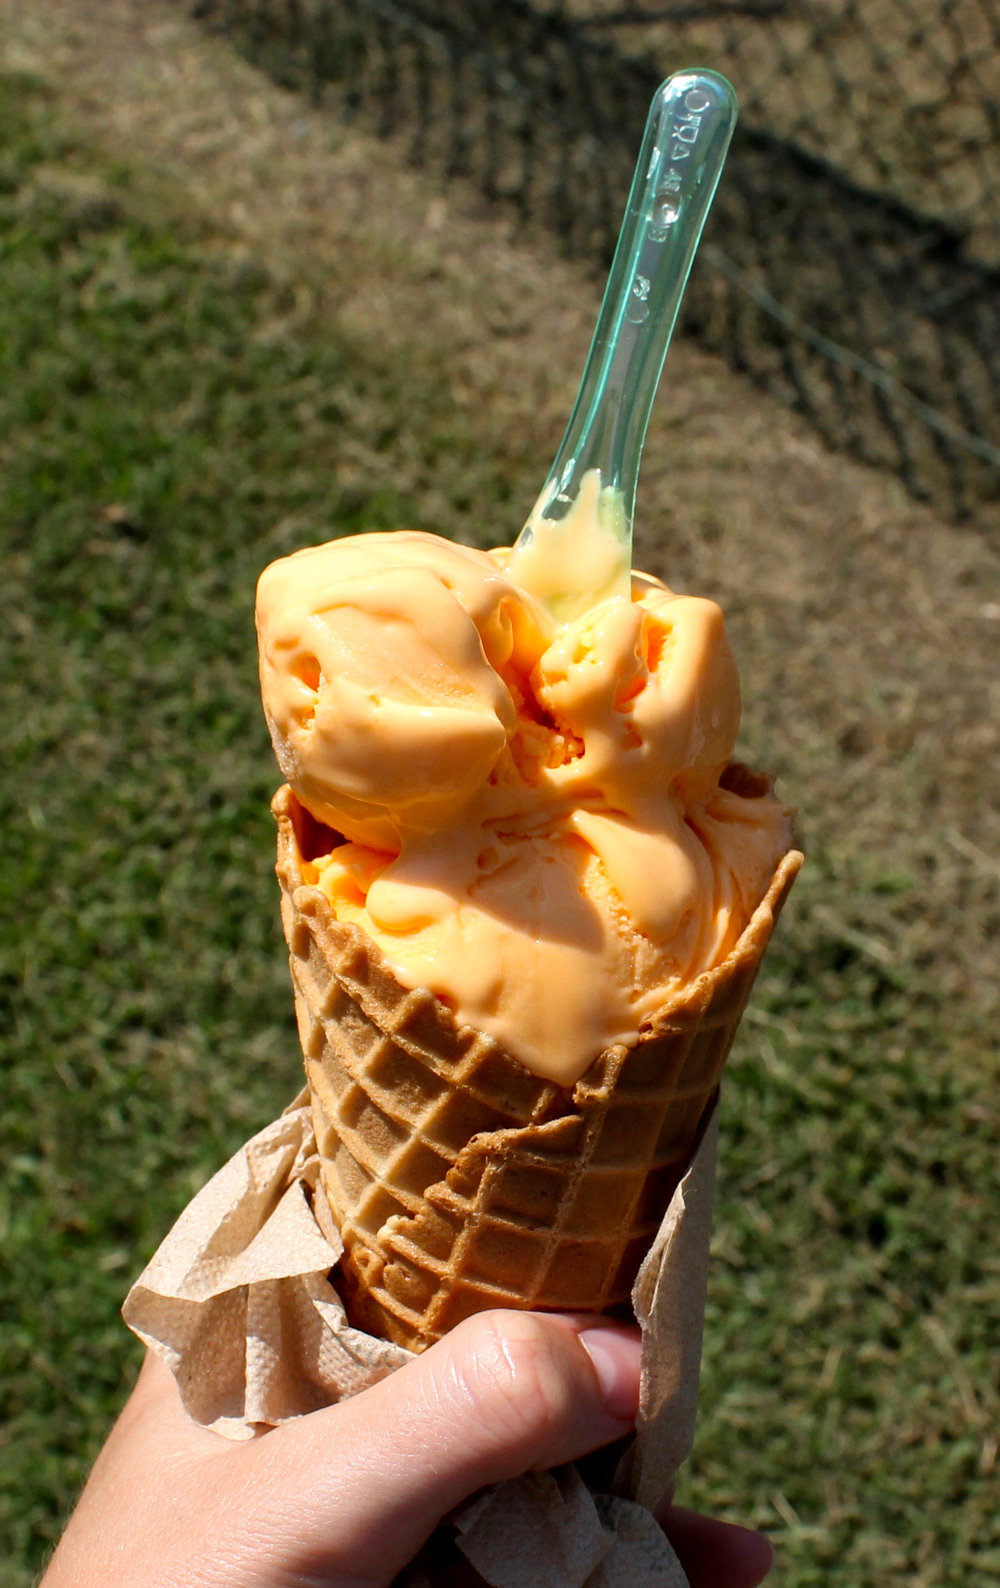 Scottish Highland Creamery ice cream cone